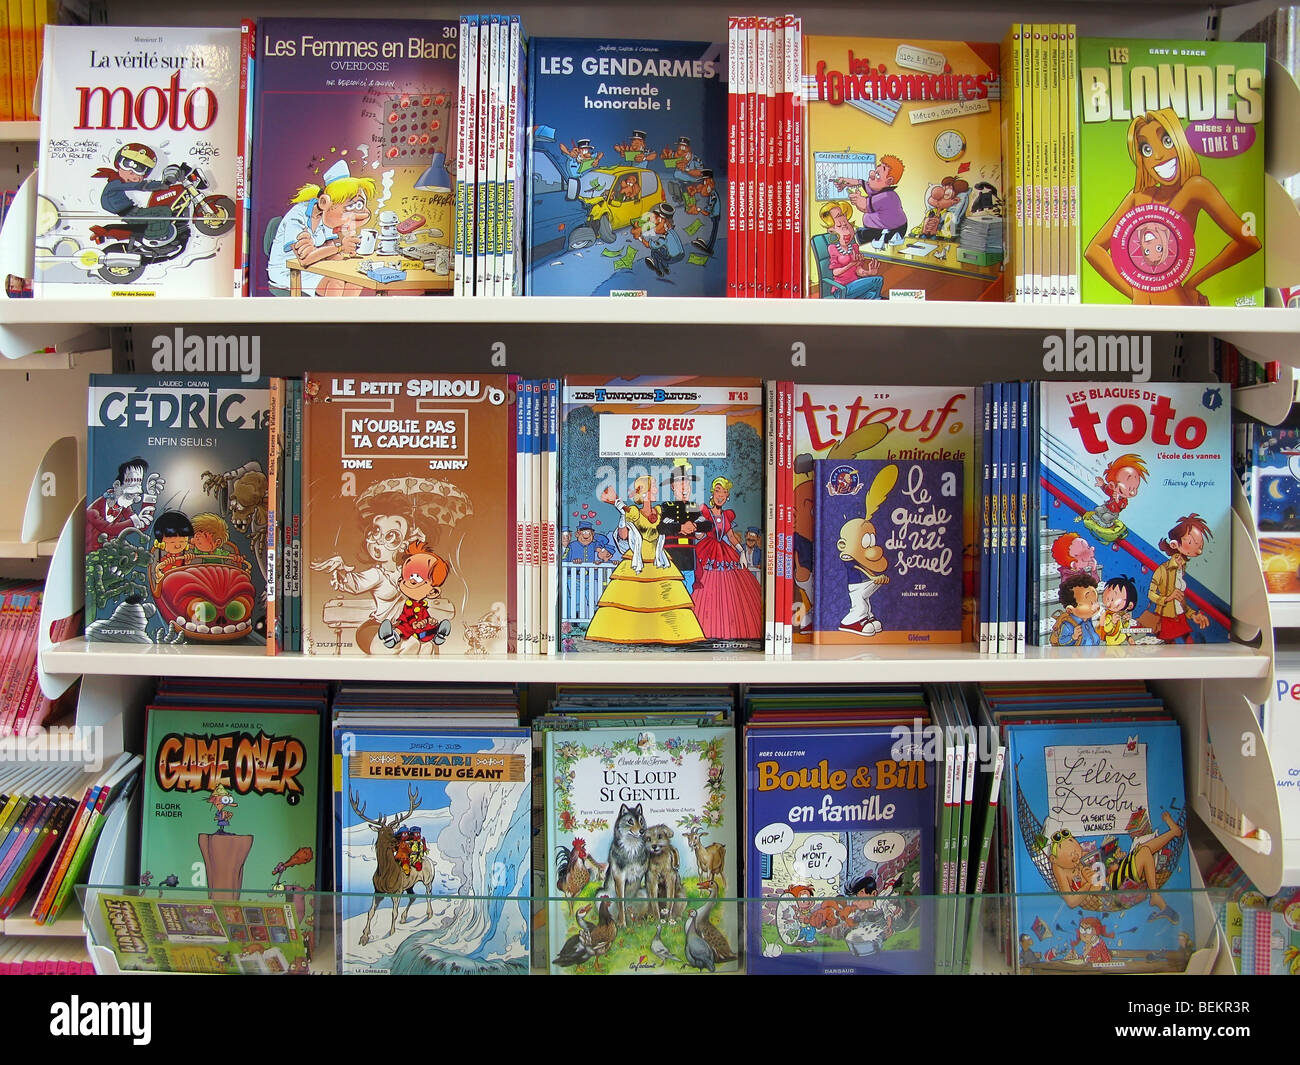 Bandes dessinees libros en un supermercado francés Foto de stock